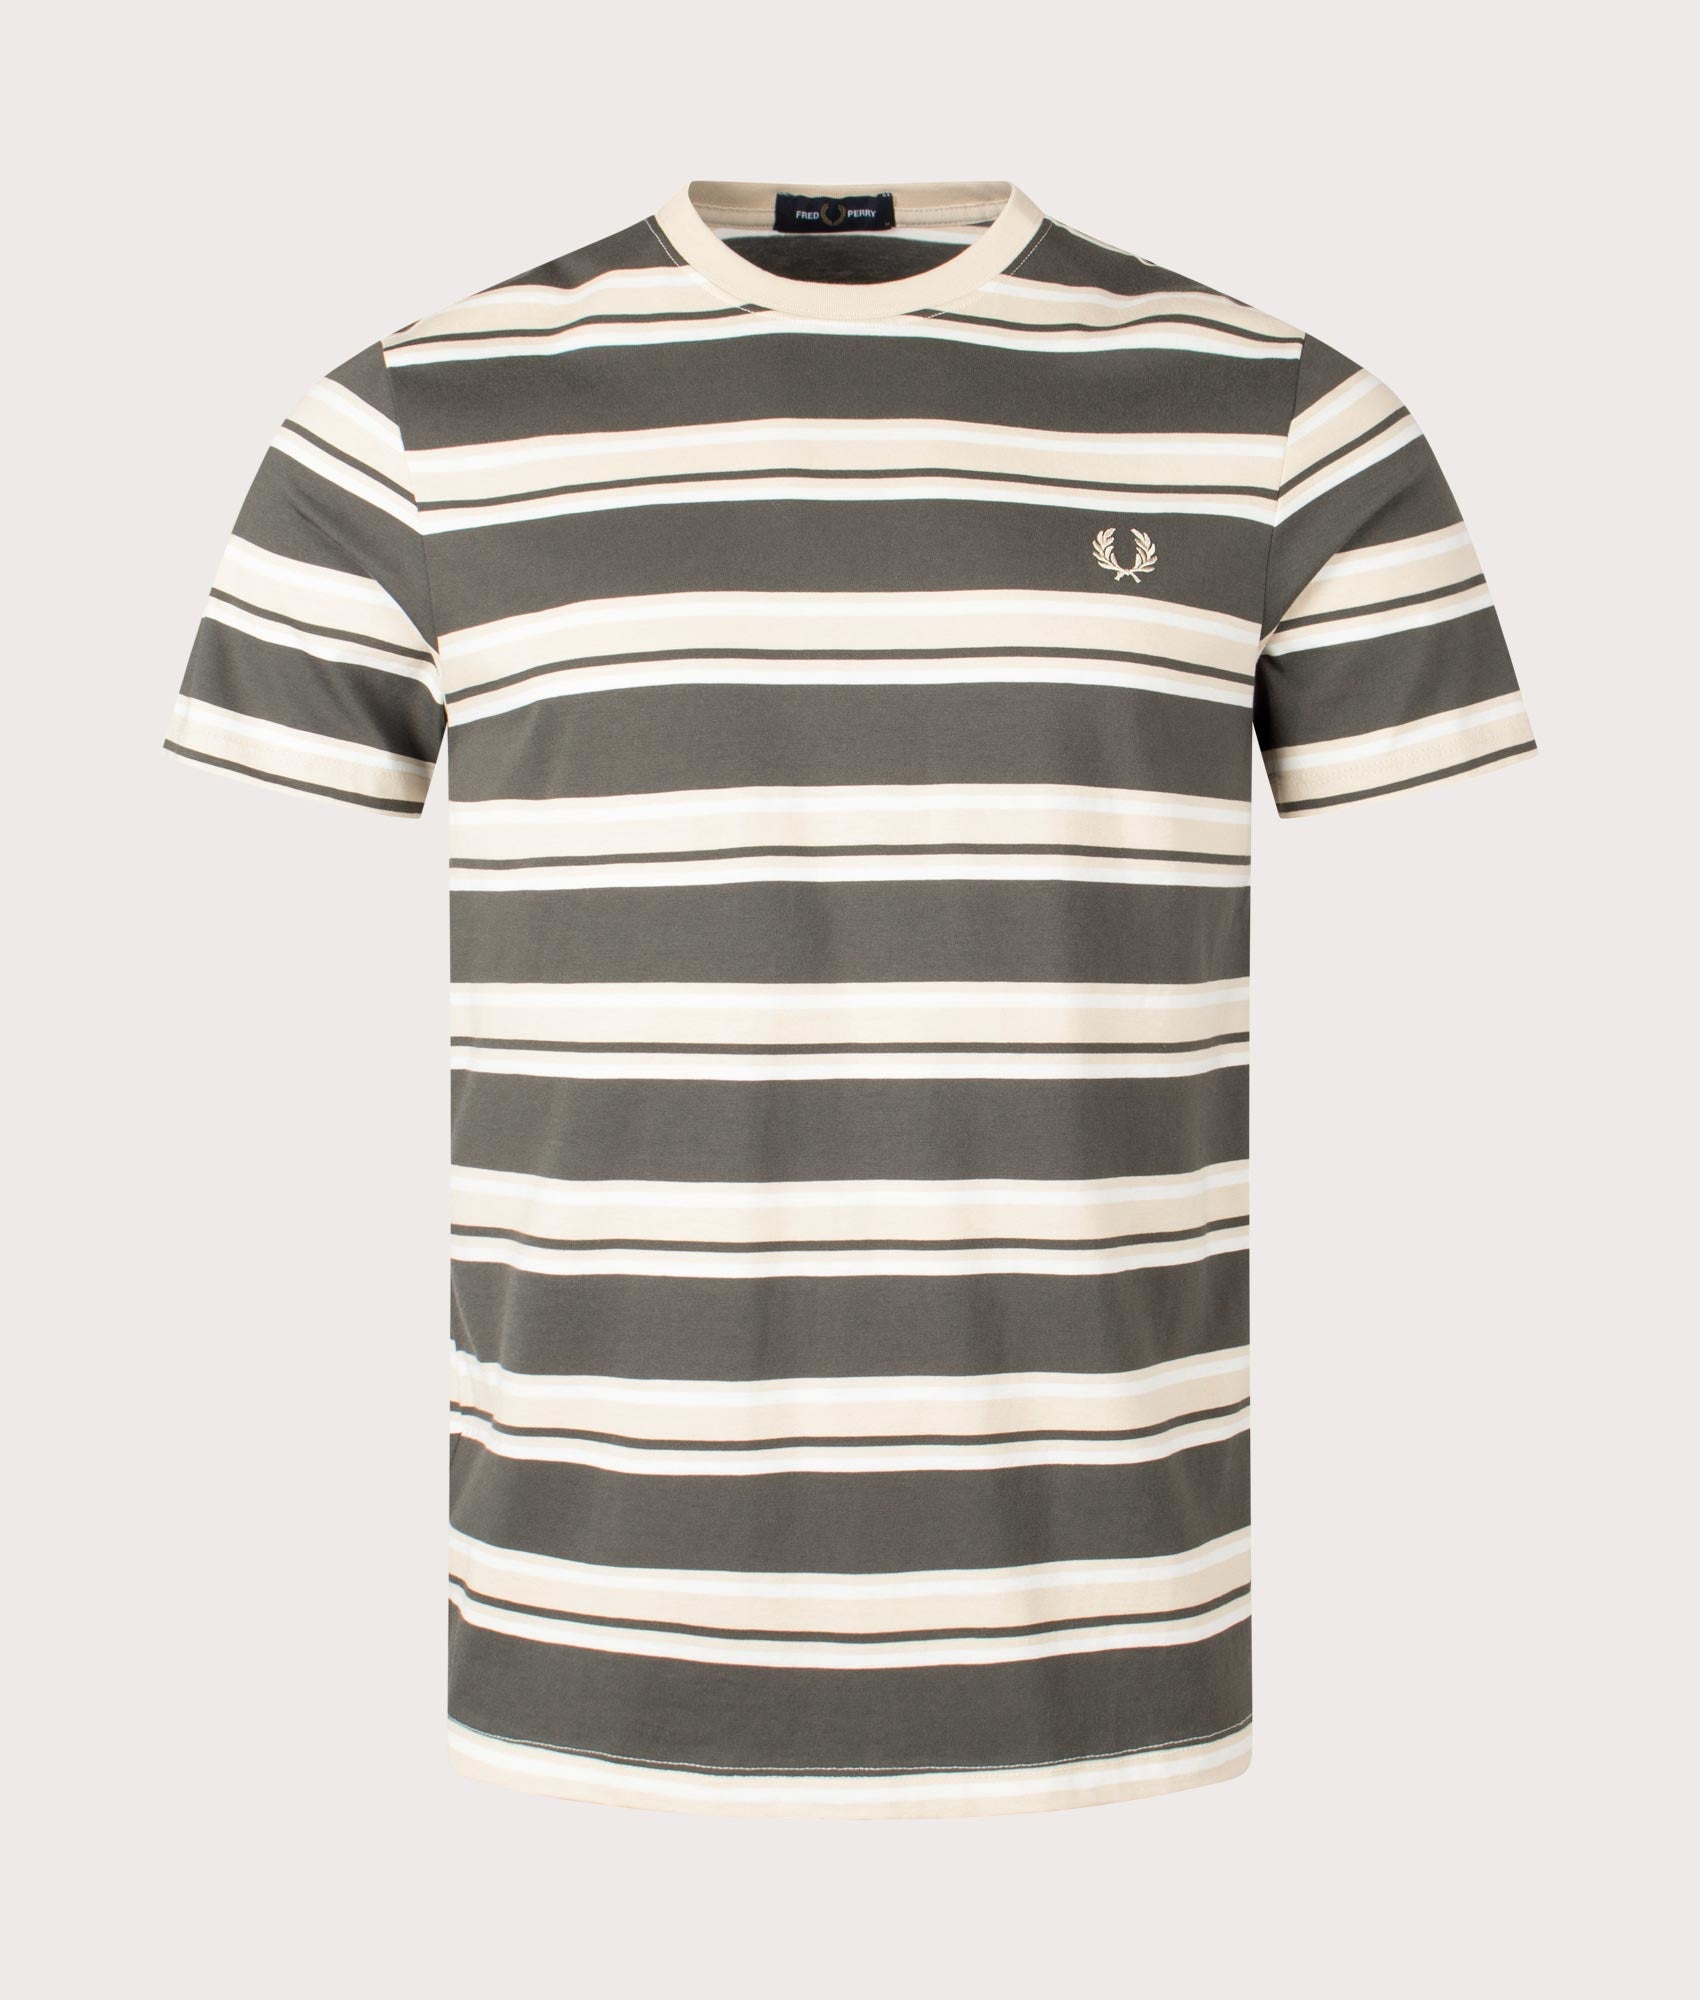 Fred Perry Mens Stripe T-Shirt - Colour: U98 Field Green/Snow White/Oatmeal - Size: XL